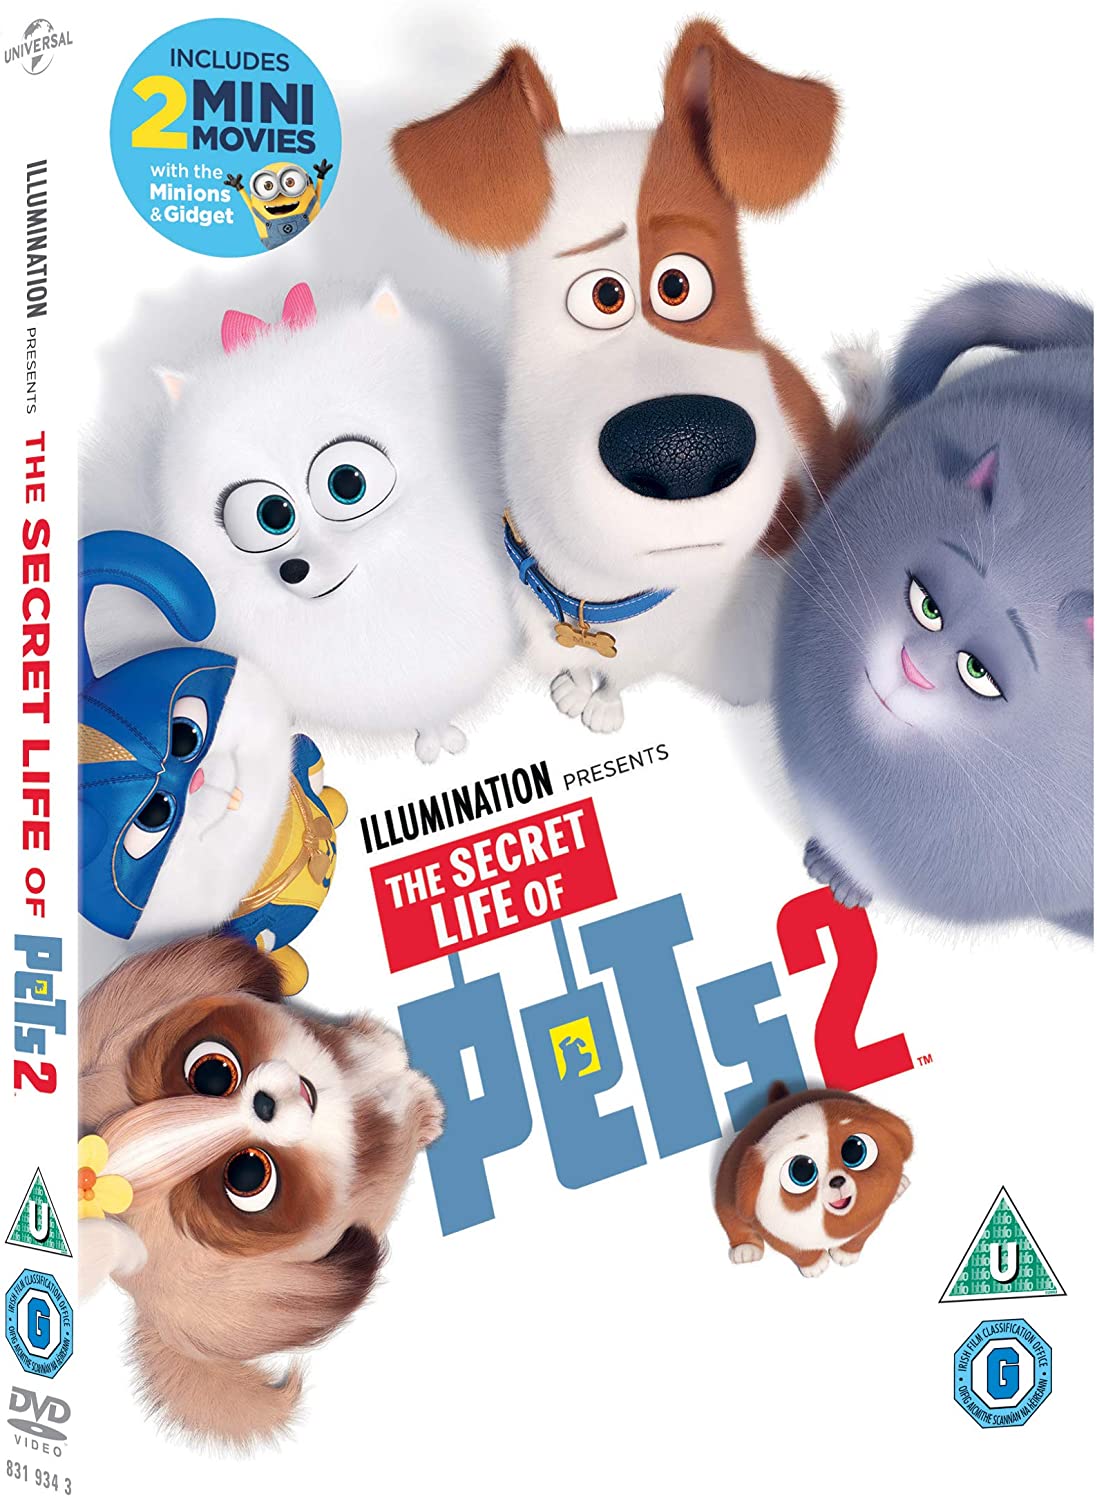 The Secret Life Of Pets 2 [2019] (Illumination) (DVD)